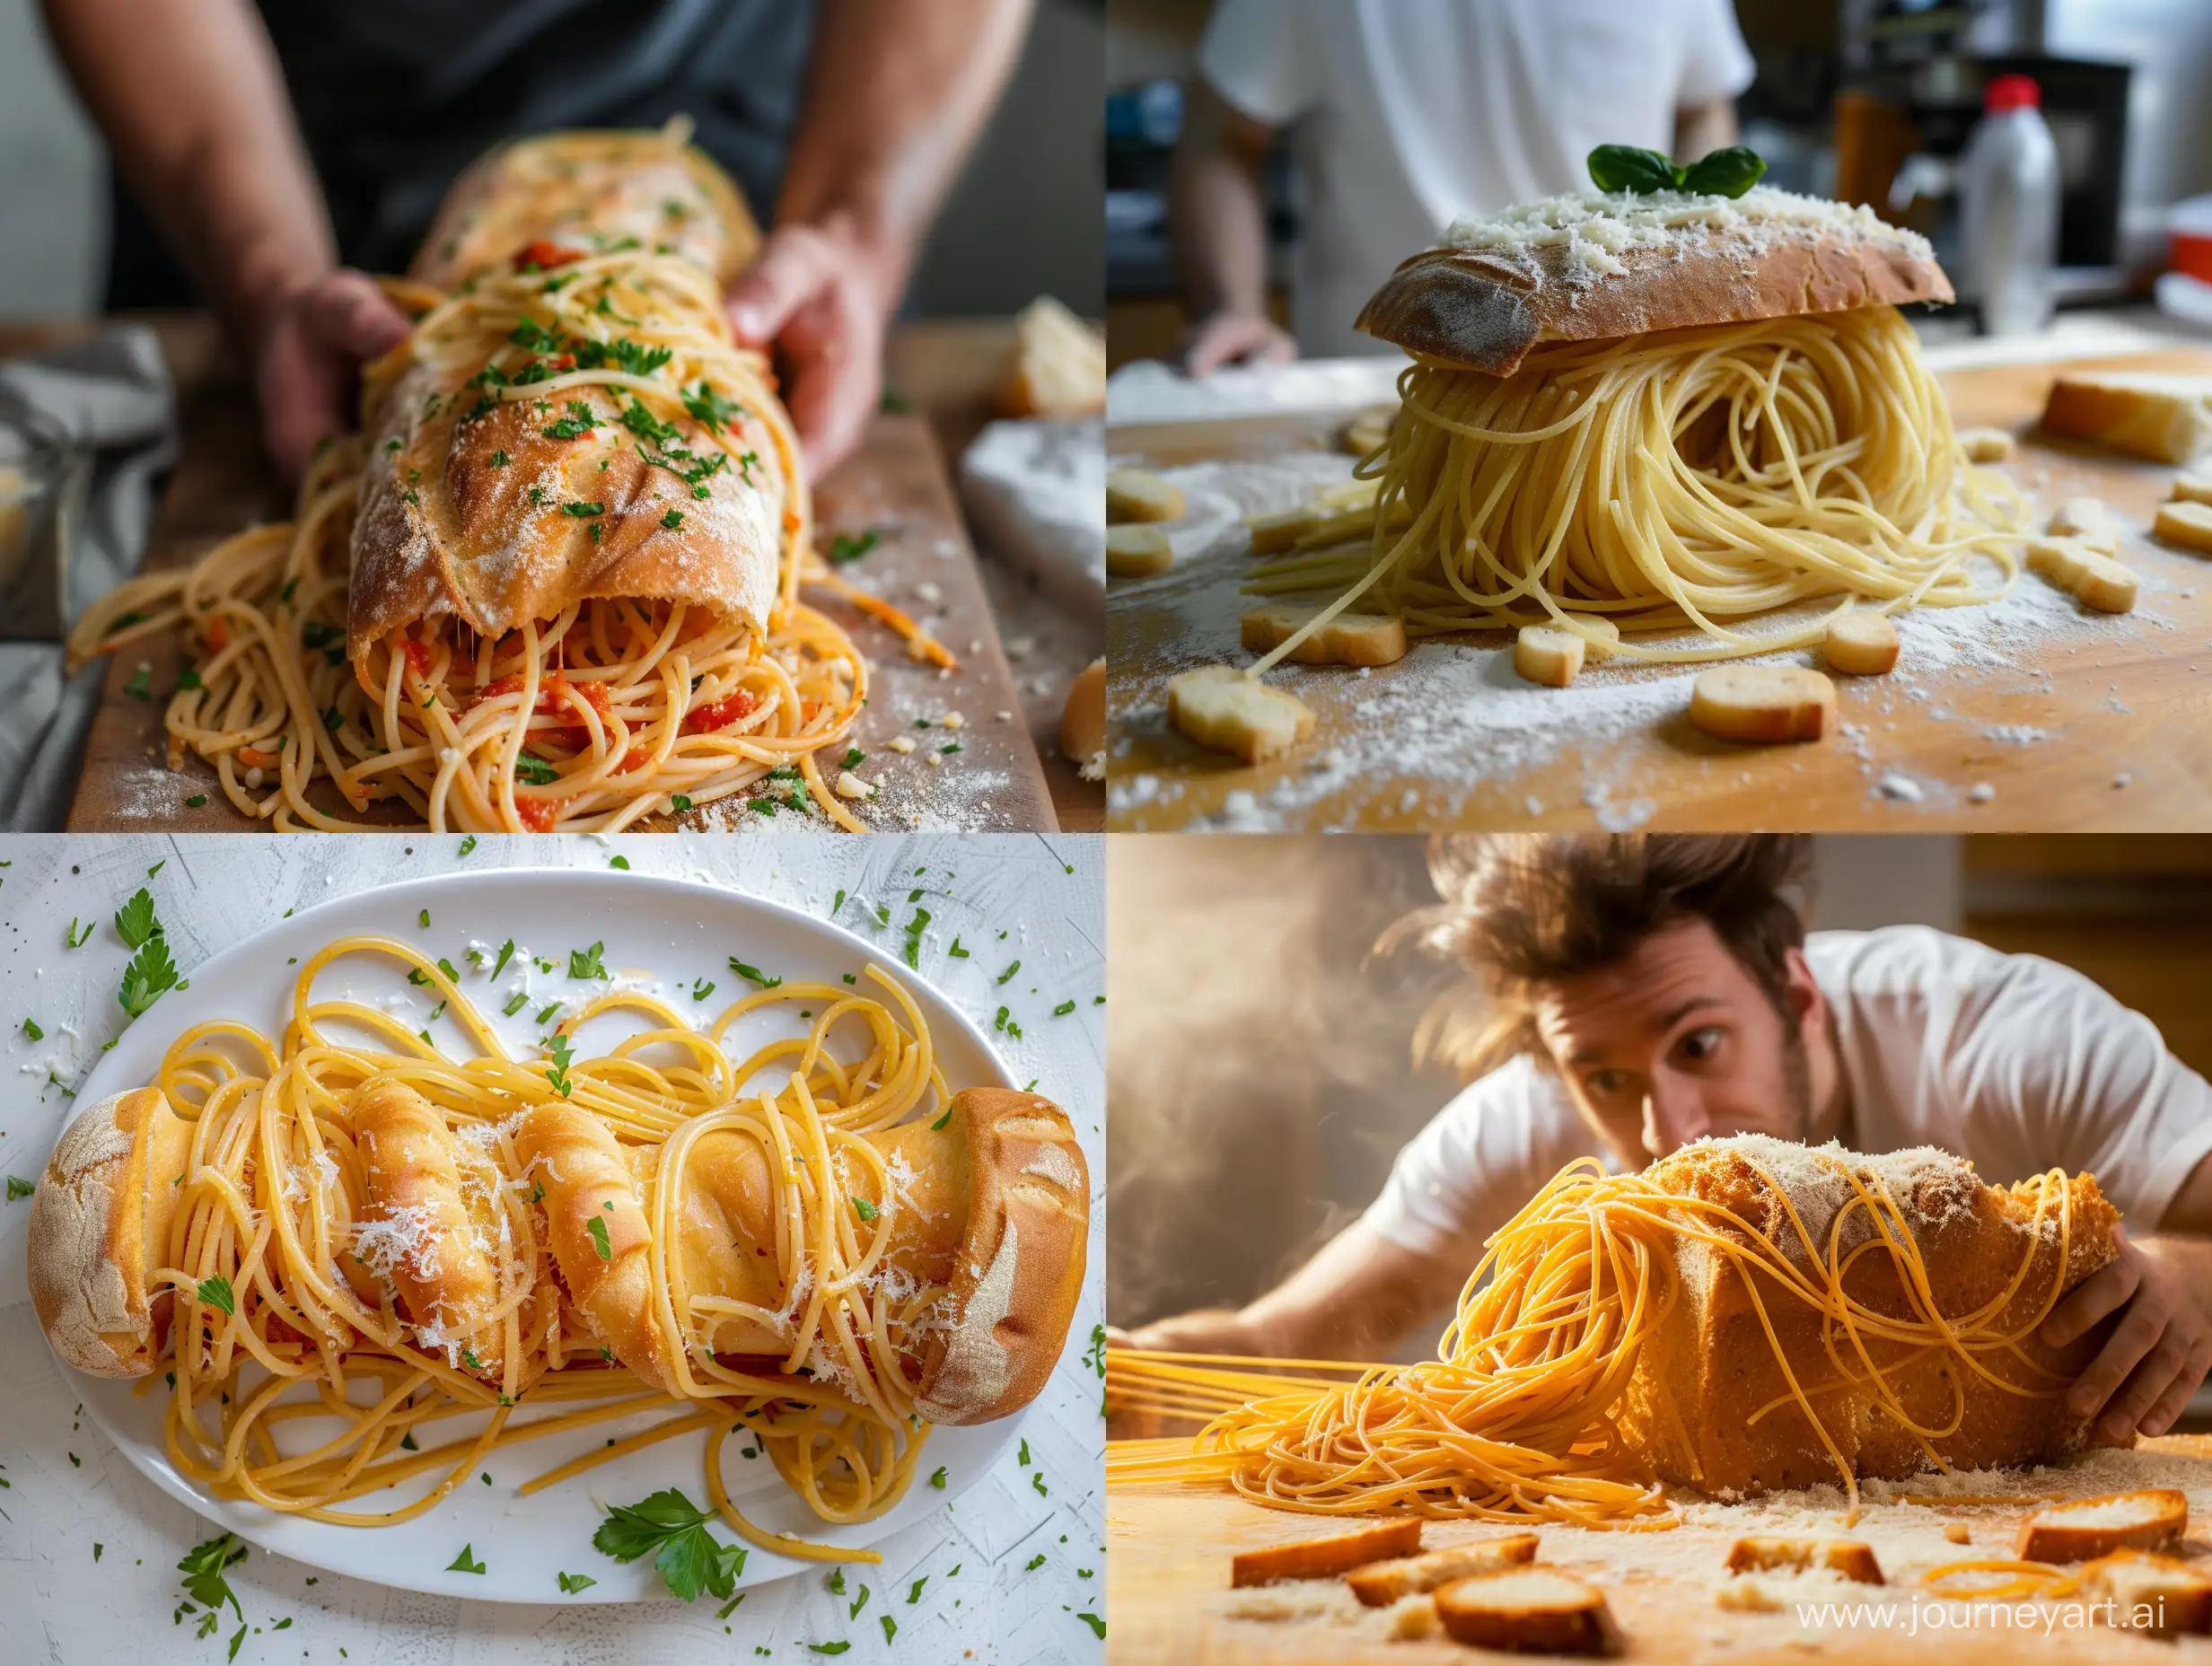 Man-Preparing-Spaghetti-with-Bread-Ingredients